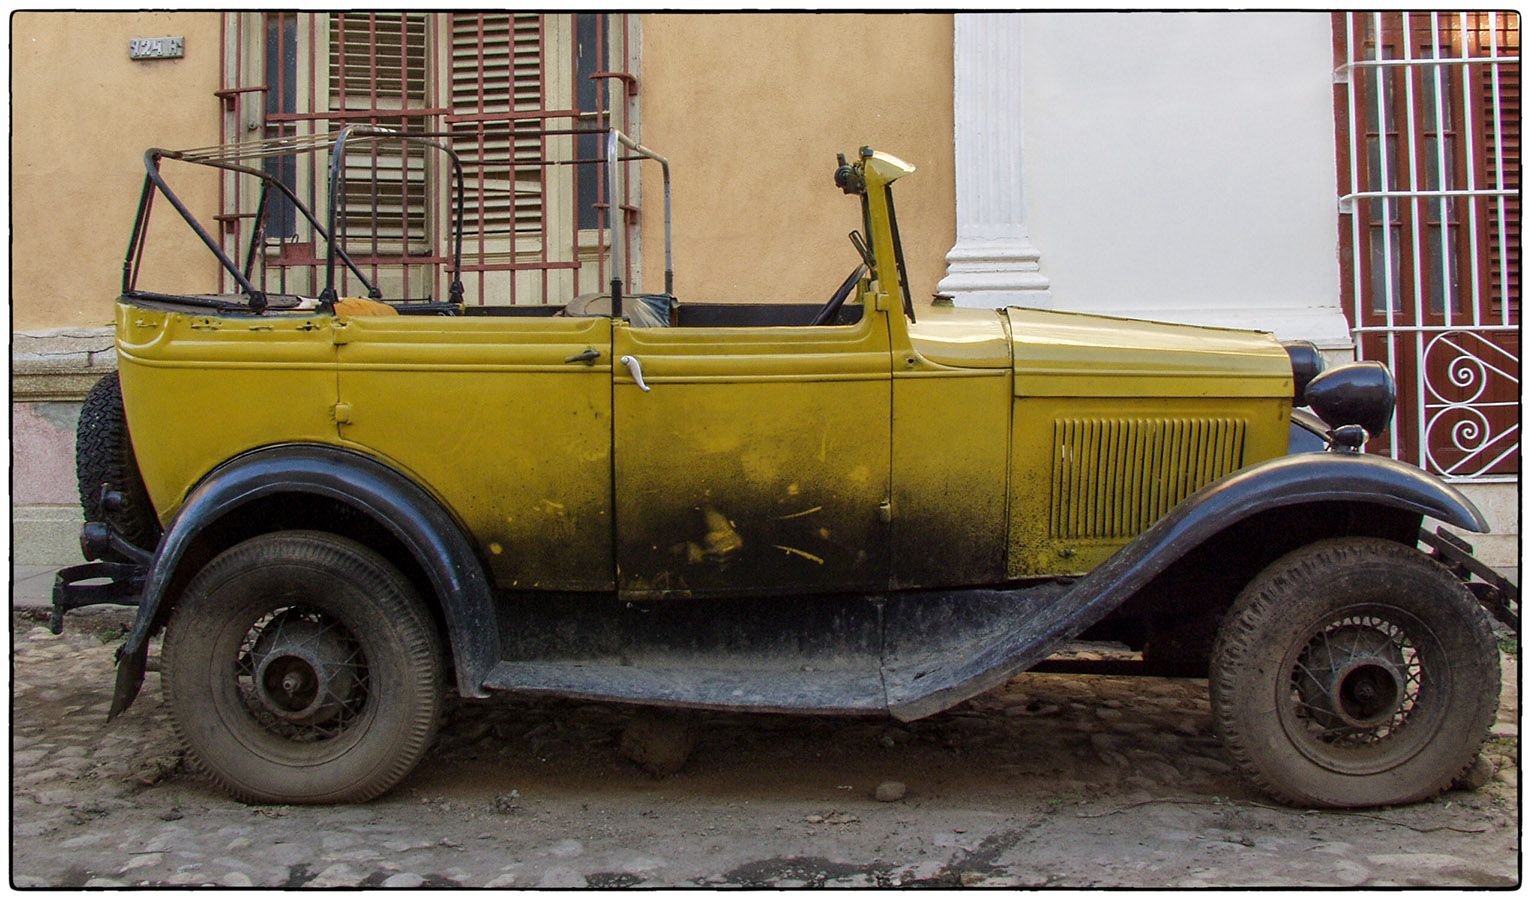 Cabriolet jaune - Photo Alain Besnard